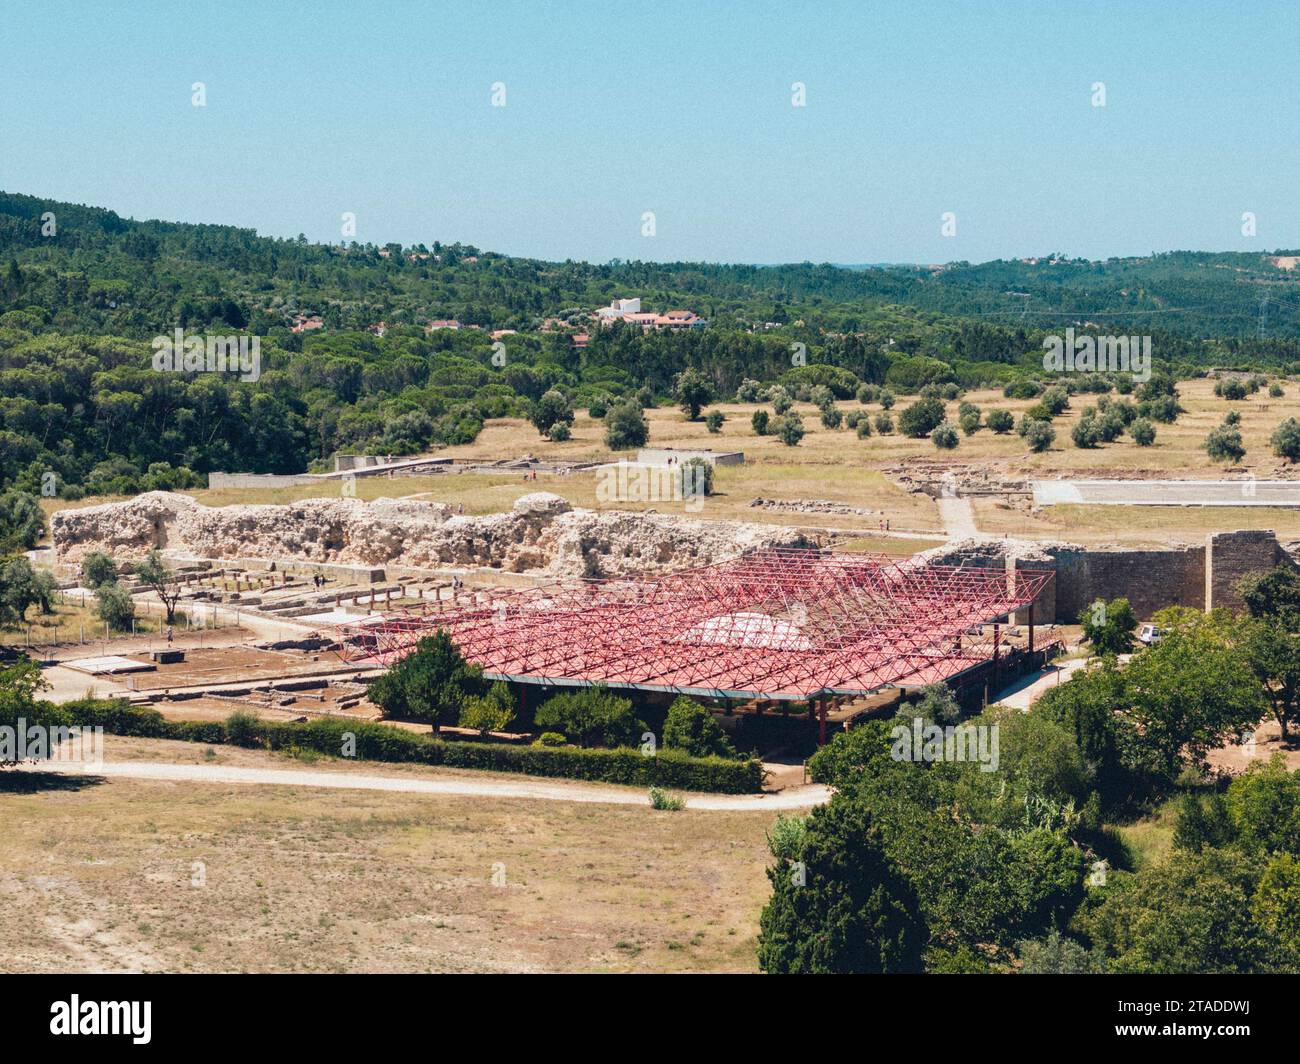 Beau paysage de ruines romaines antiques, Conimbriga, Portugal Banque D'Images